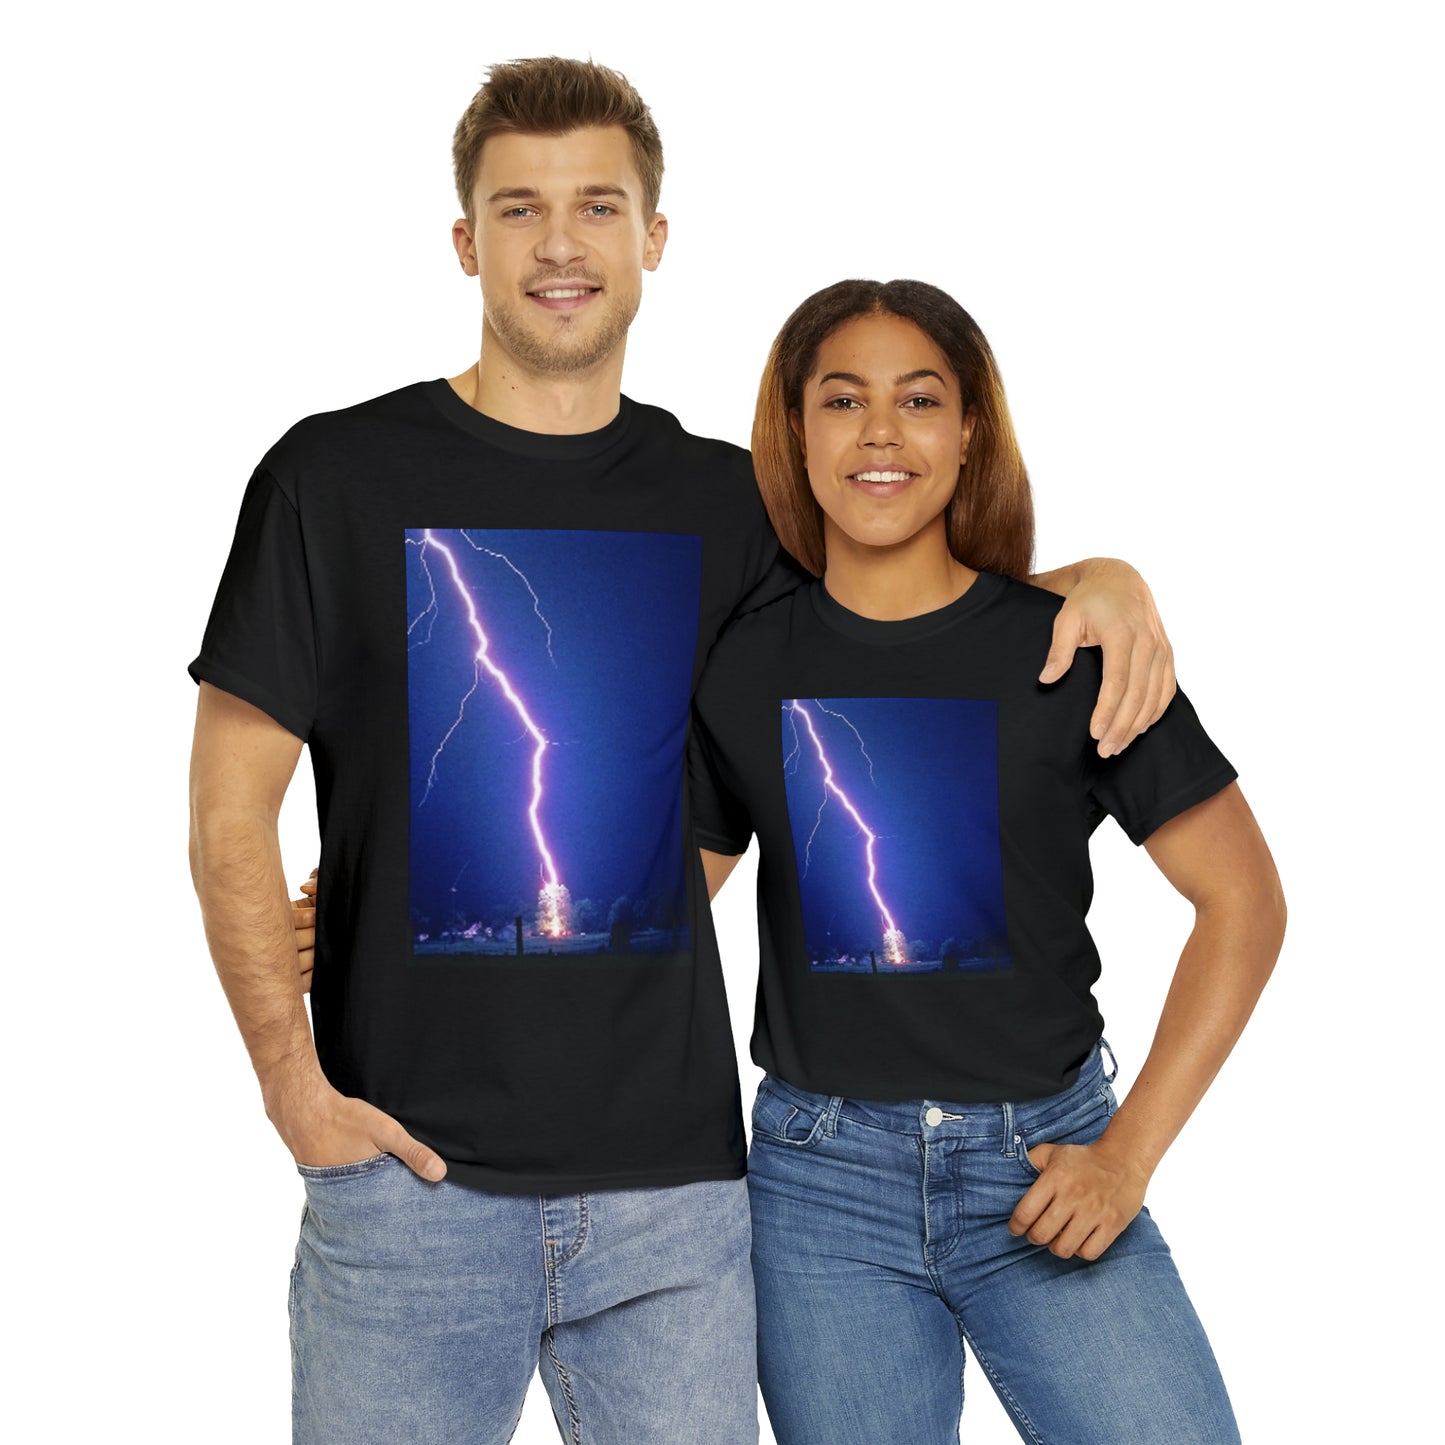 Blue Lightning Strike - Hurts Shirts Collection